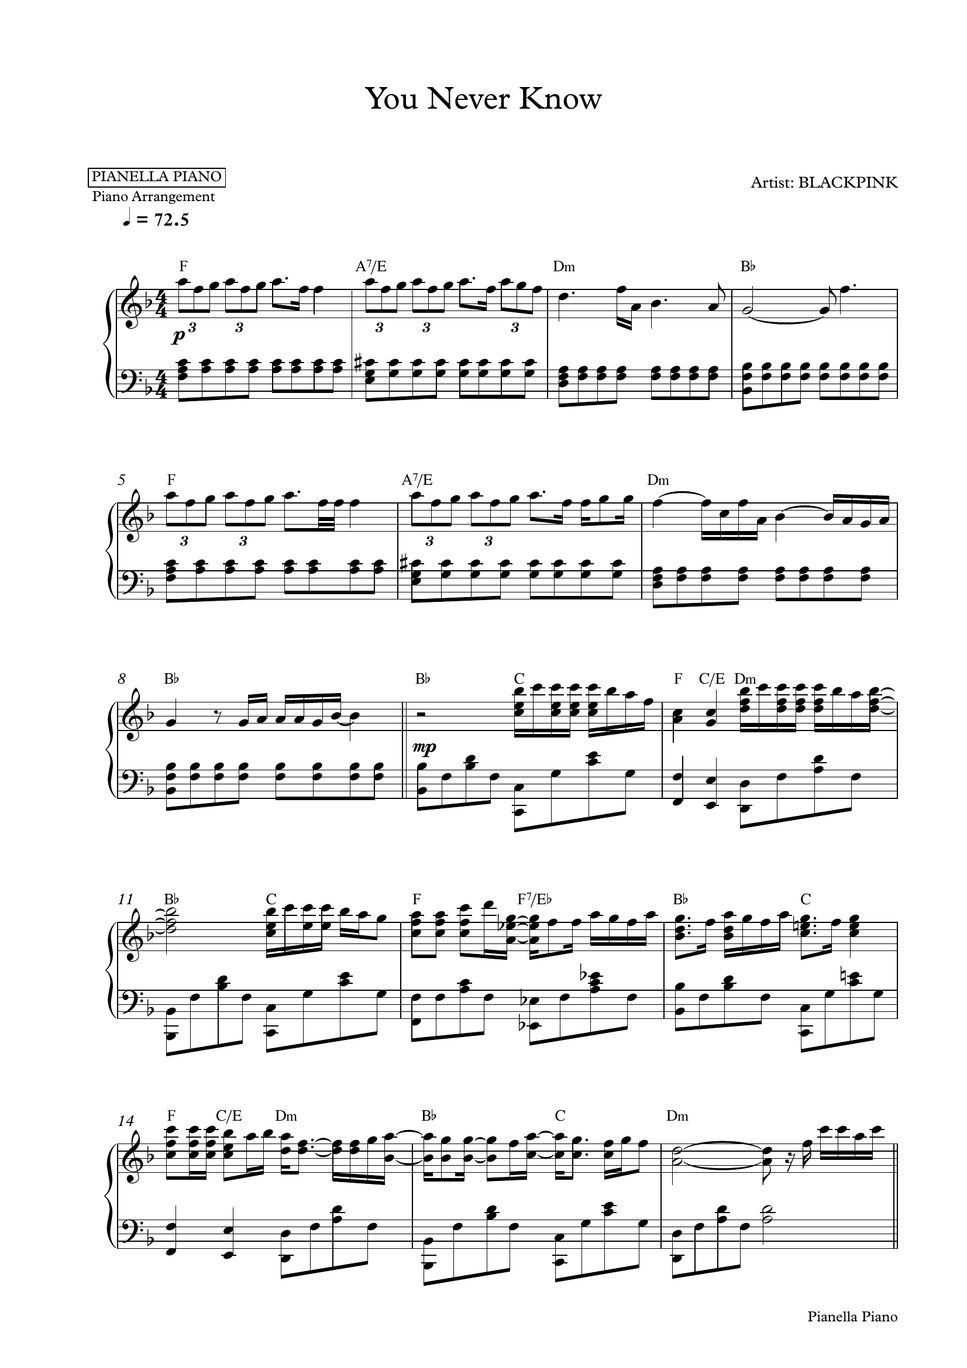 BLACKPINK - You Never Know (Piano Sheet) Spartito by Pianella Piano